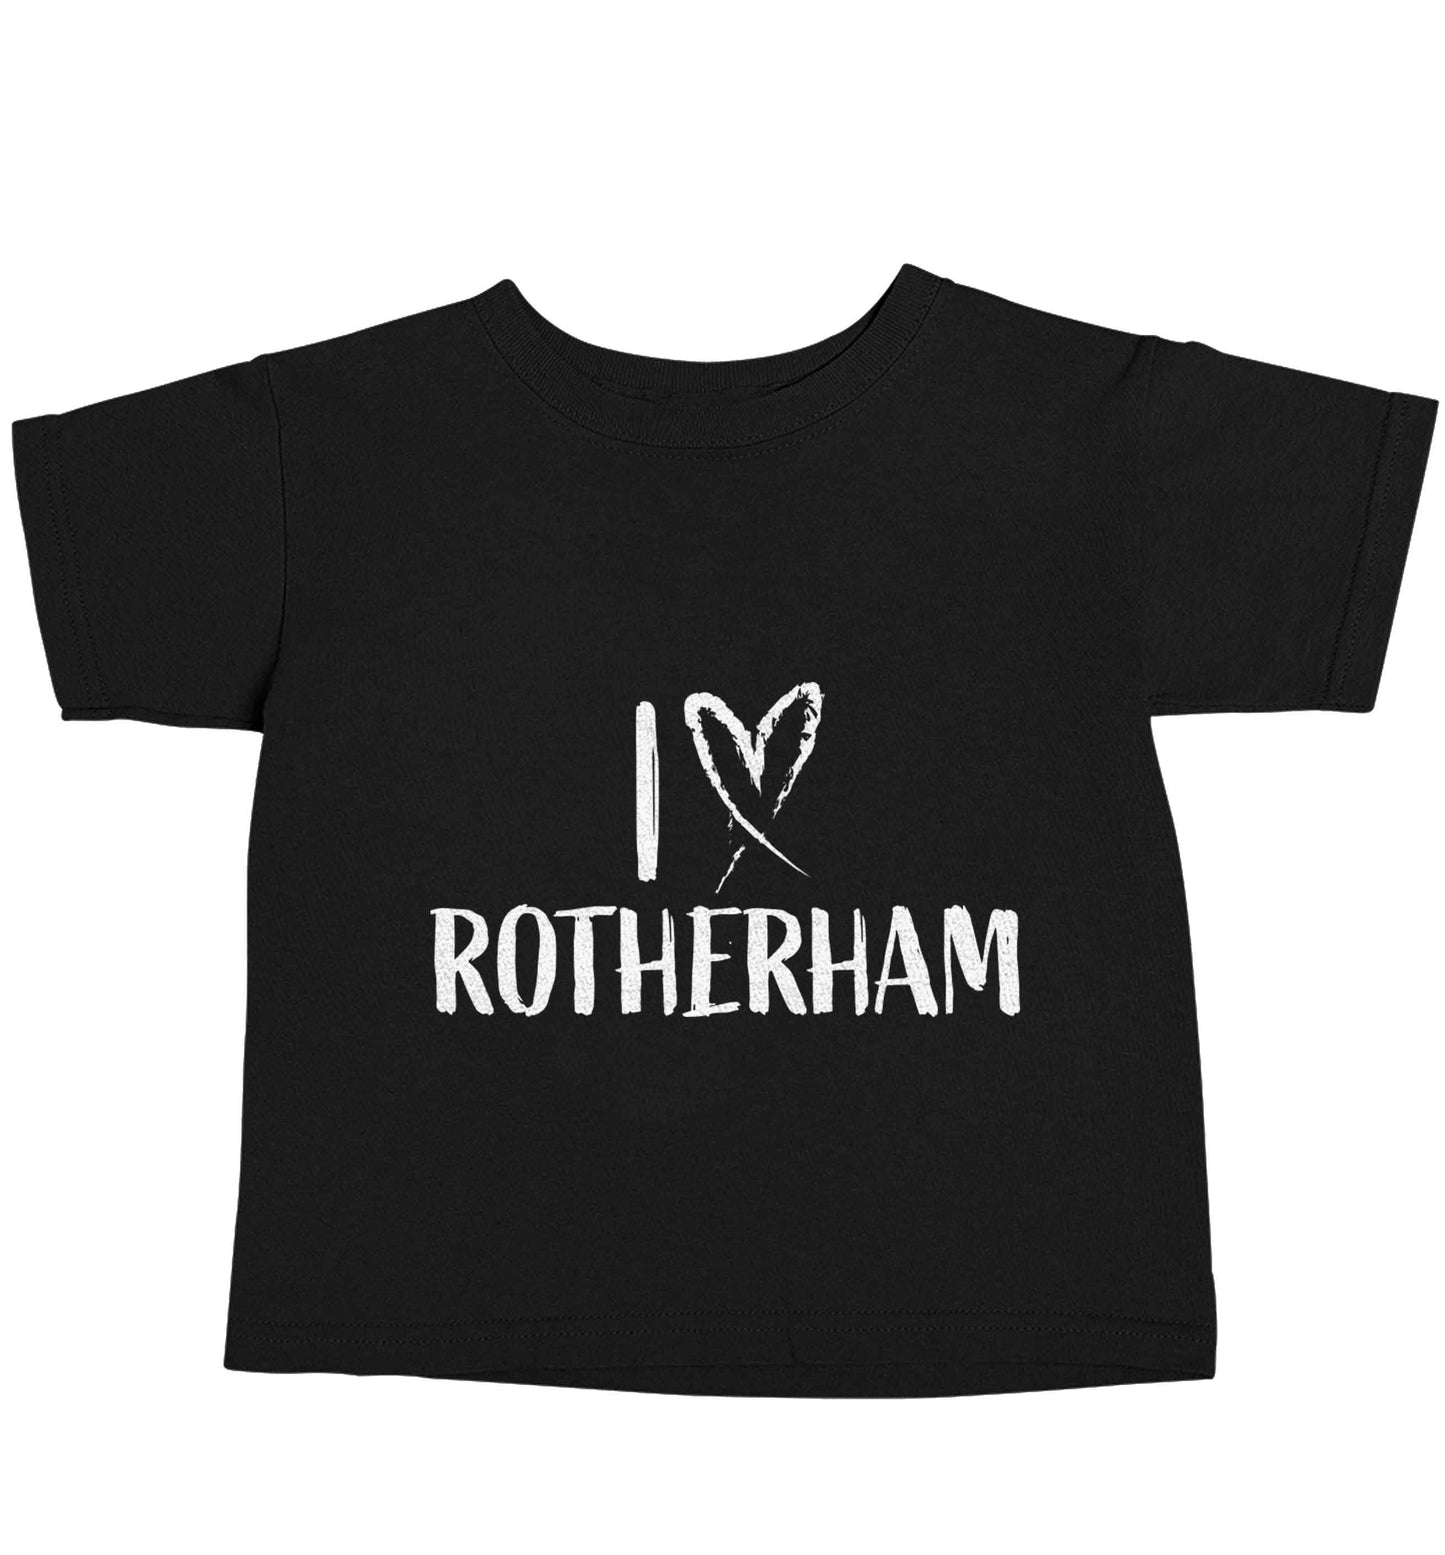 I love Rotherham Black baby toddler Tshirt 2 years